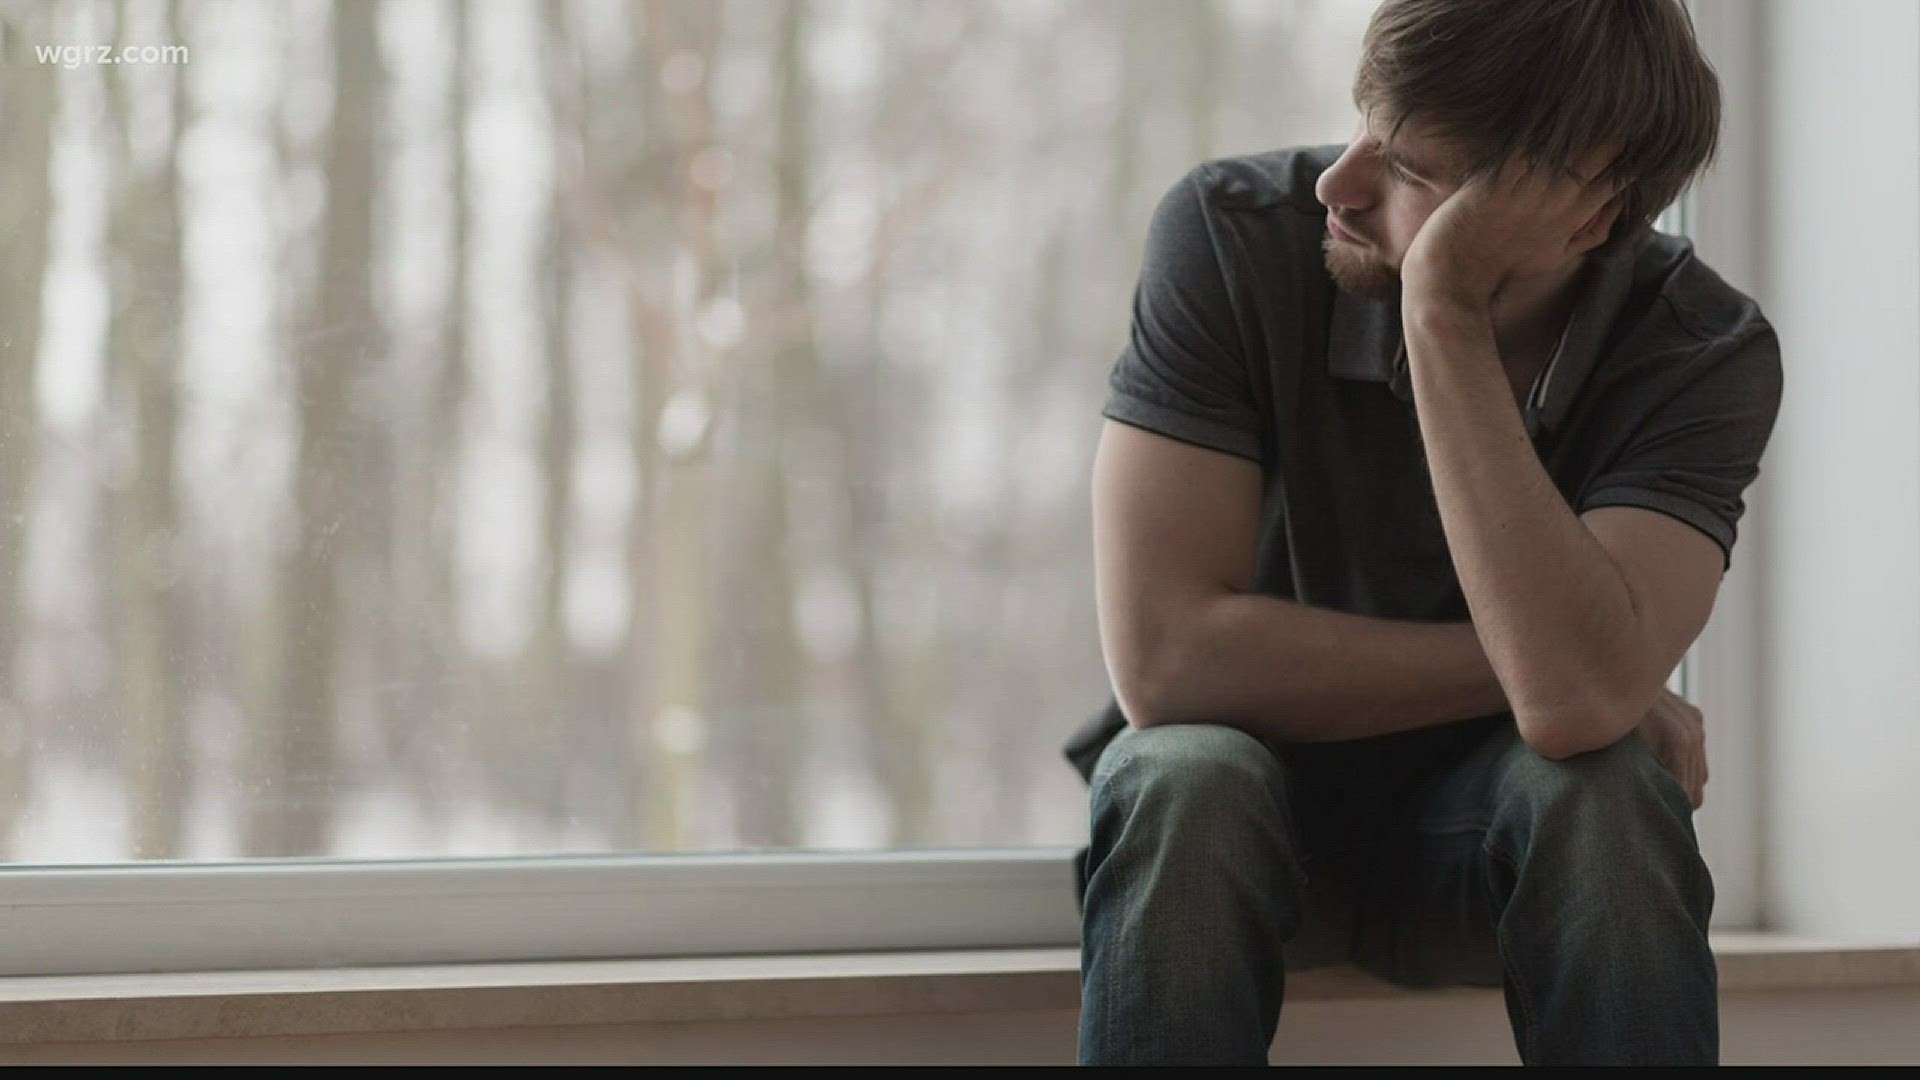 Breaking Stigma: Getting Help For Depression